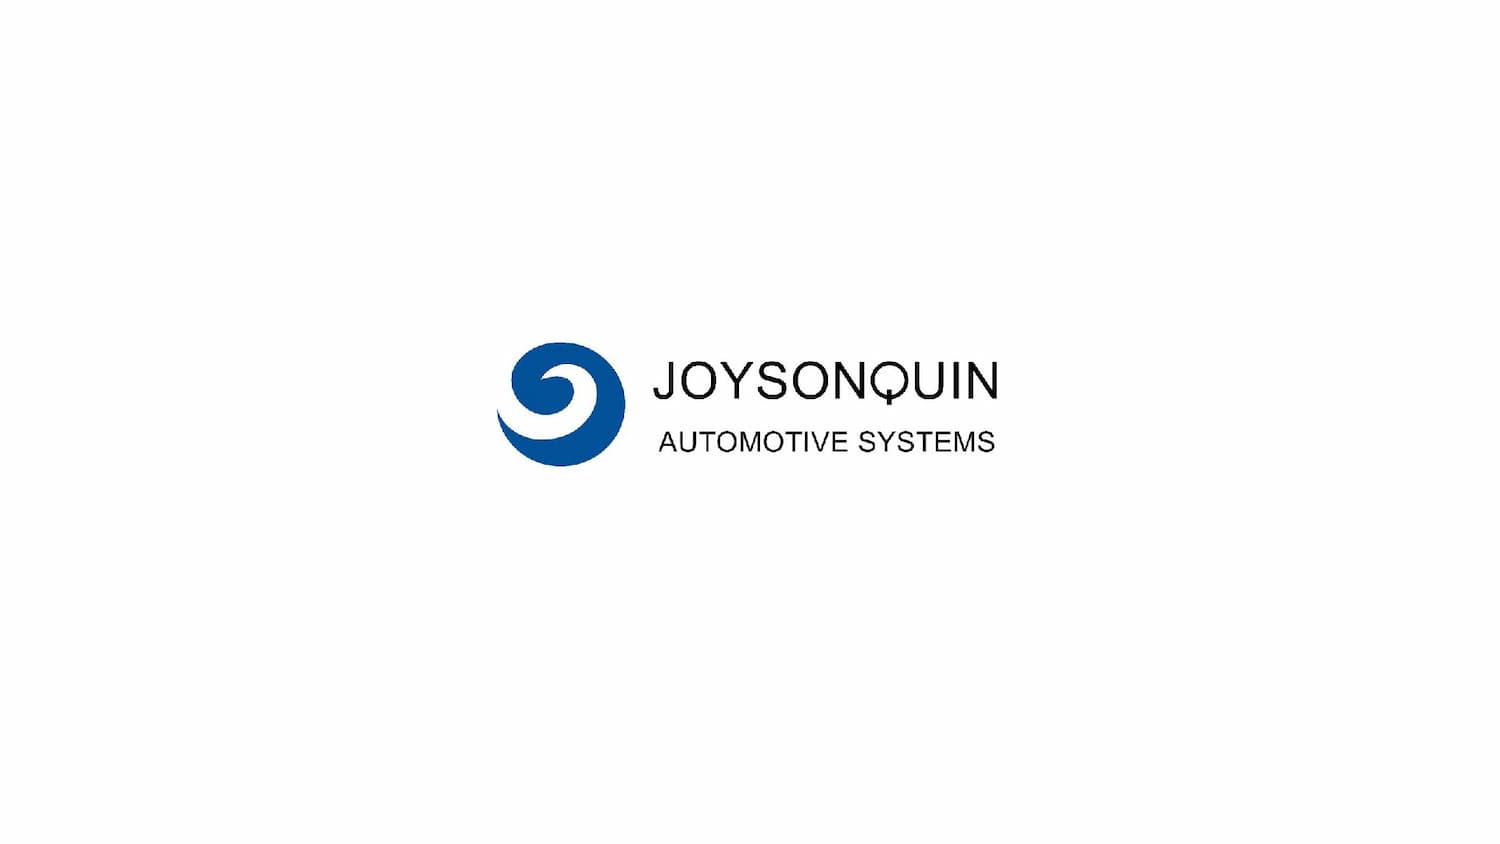 JOYSONQUIN Automotive Systems México